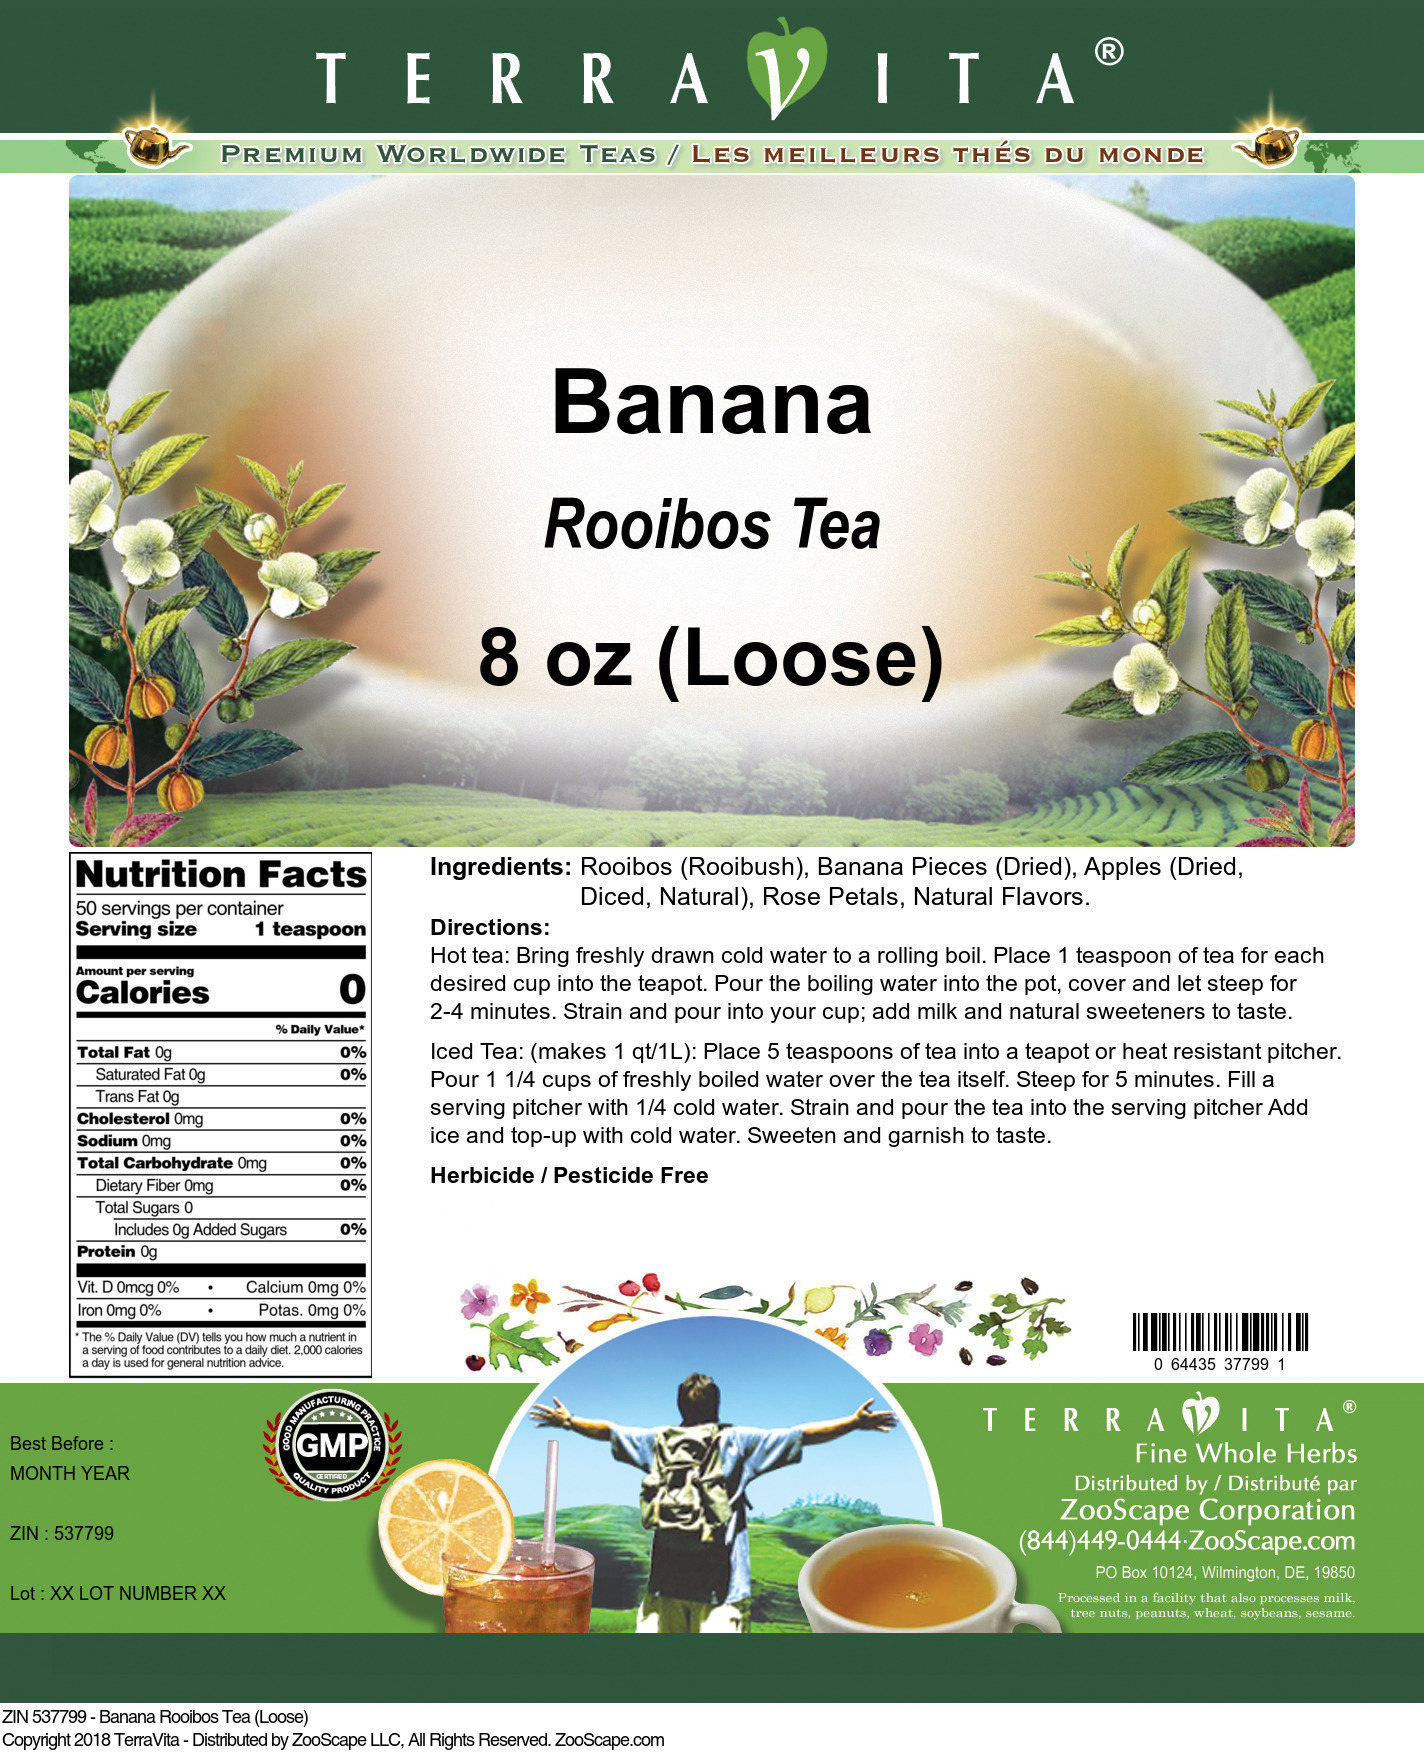 Banana Rooibos Tea (Loose) - Label